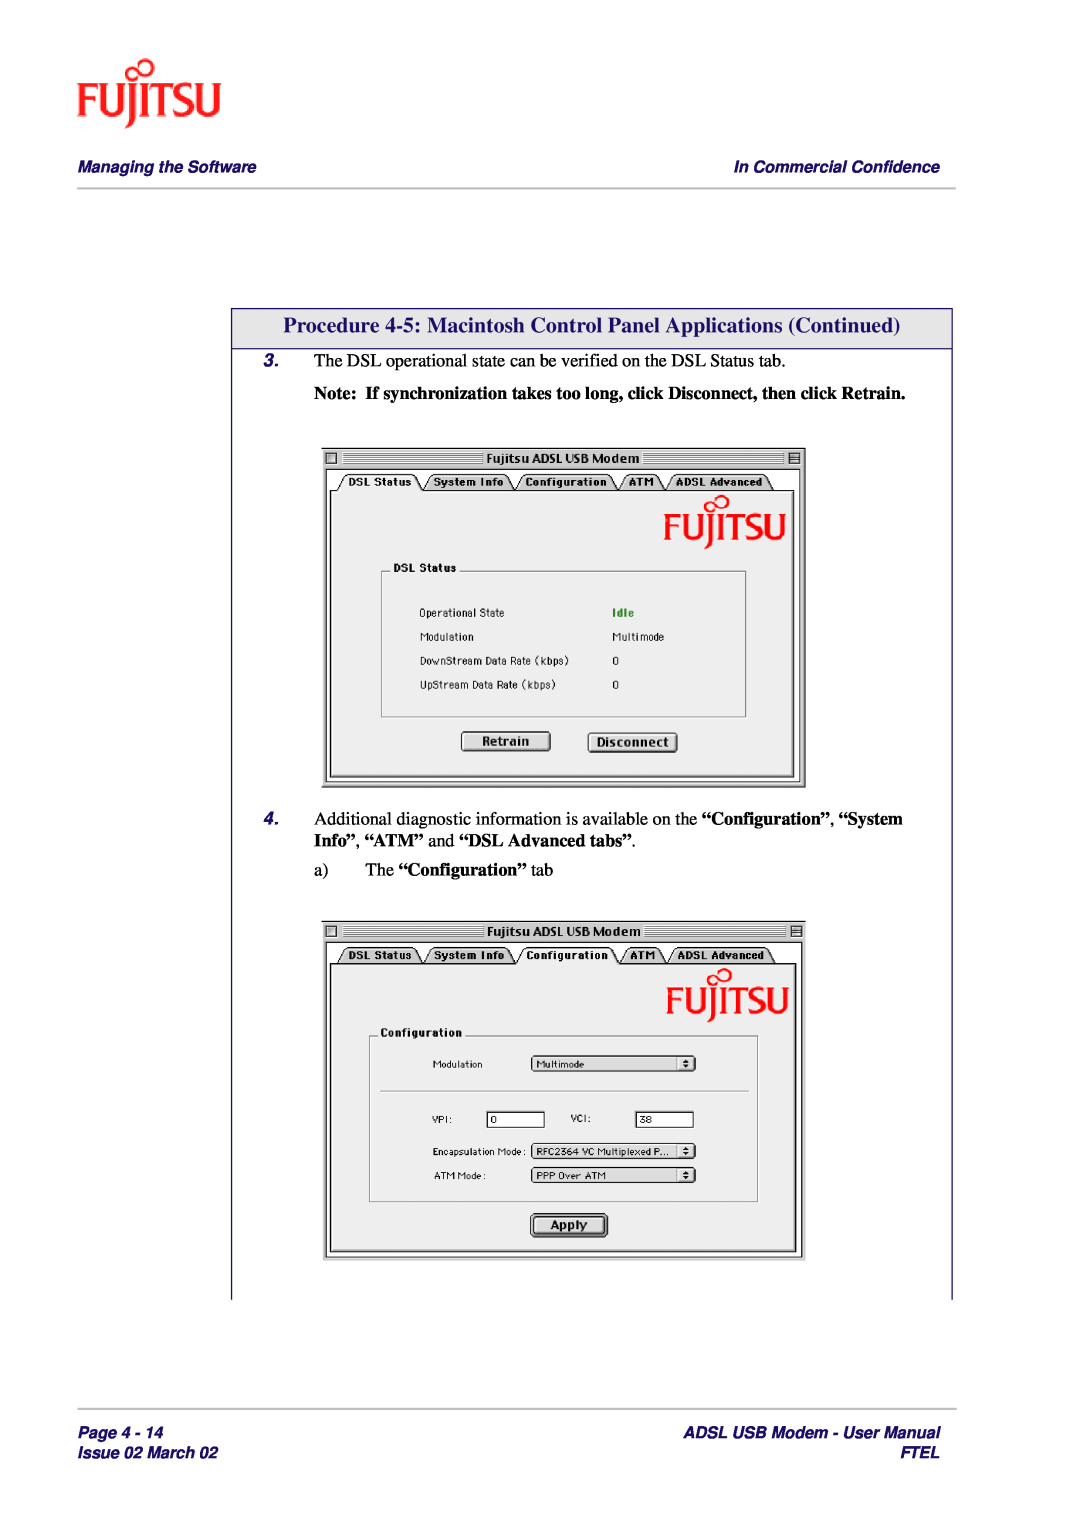 Fujitsu 3XAX-00803AAS Procedure 4-5 Macintosh Control Panel Applications Continued, a The “Configuration” tab, Page 4 